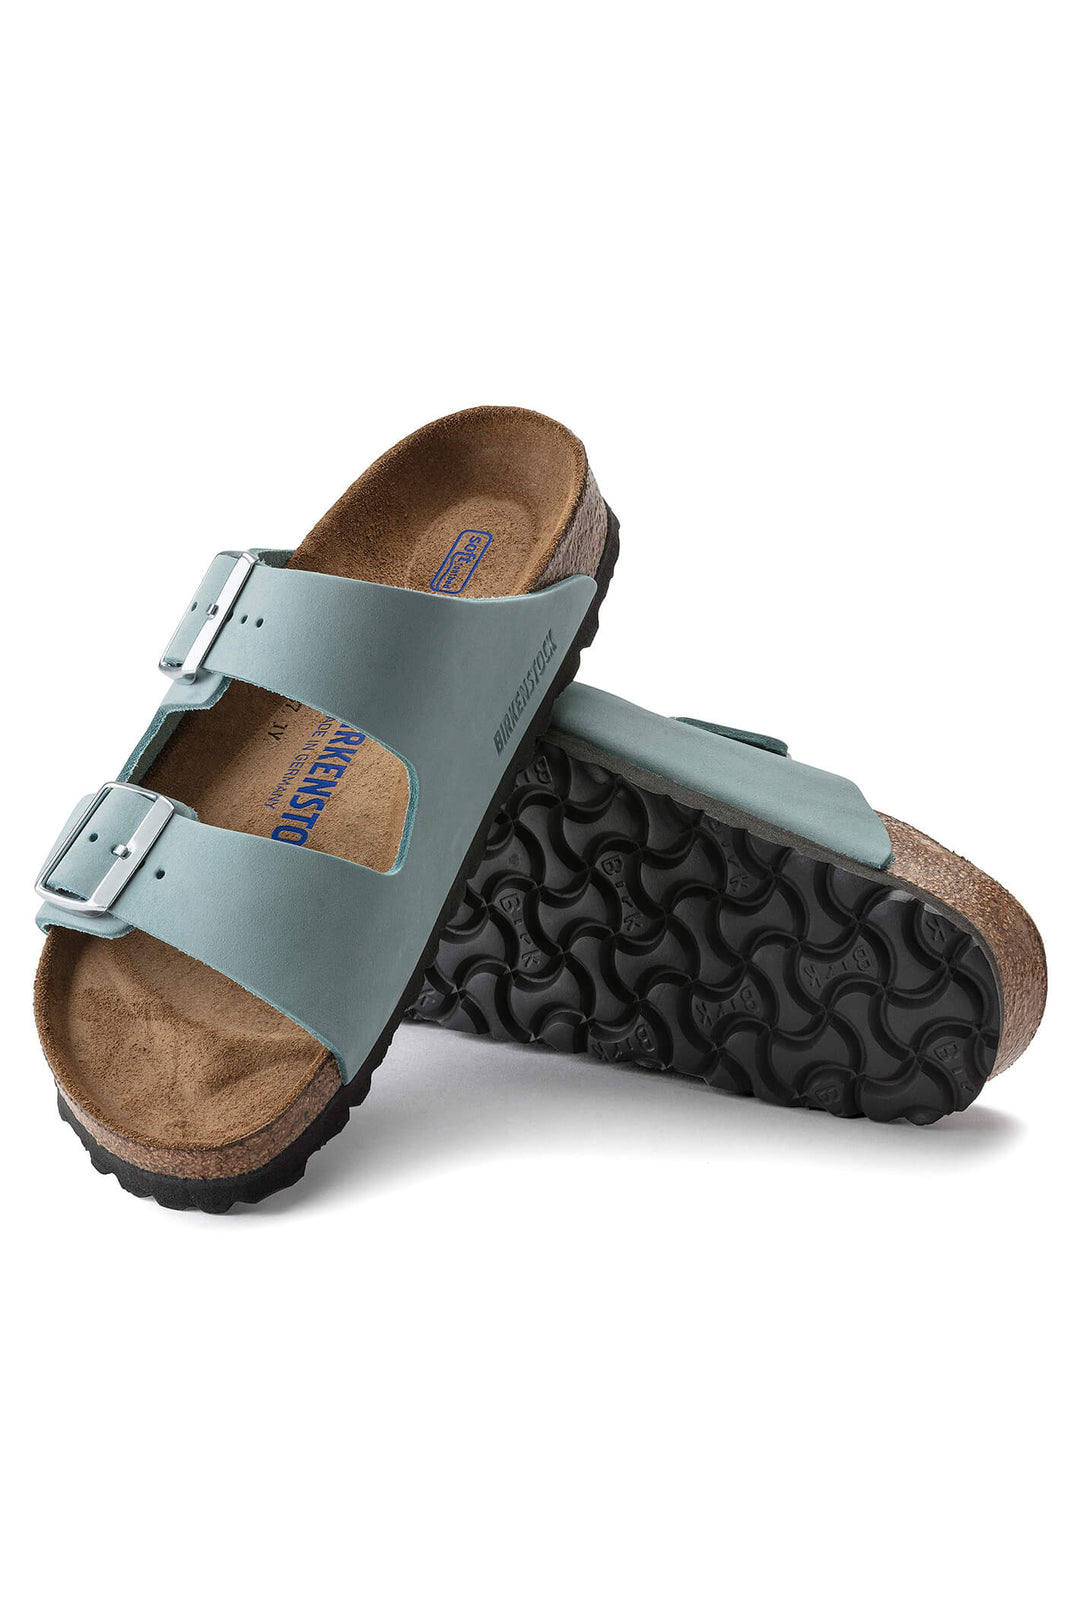 Birkenstock Arizona 1021446 Faded Aqua SFB Narrow Fit Sandal - Shirley Allum Boutique